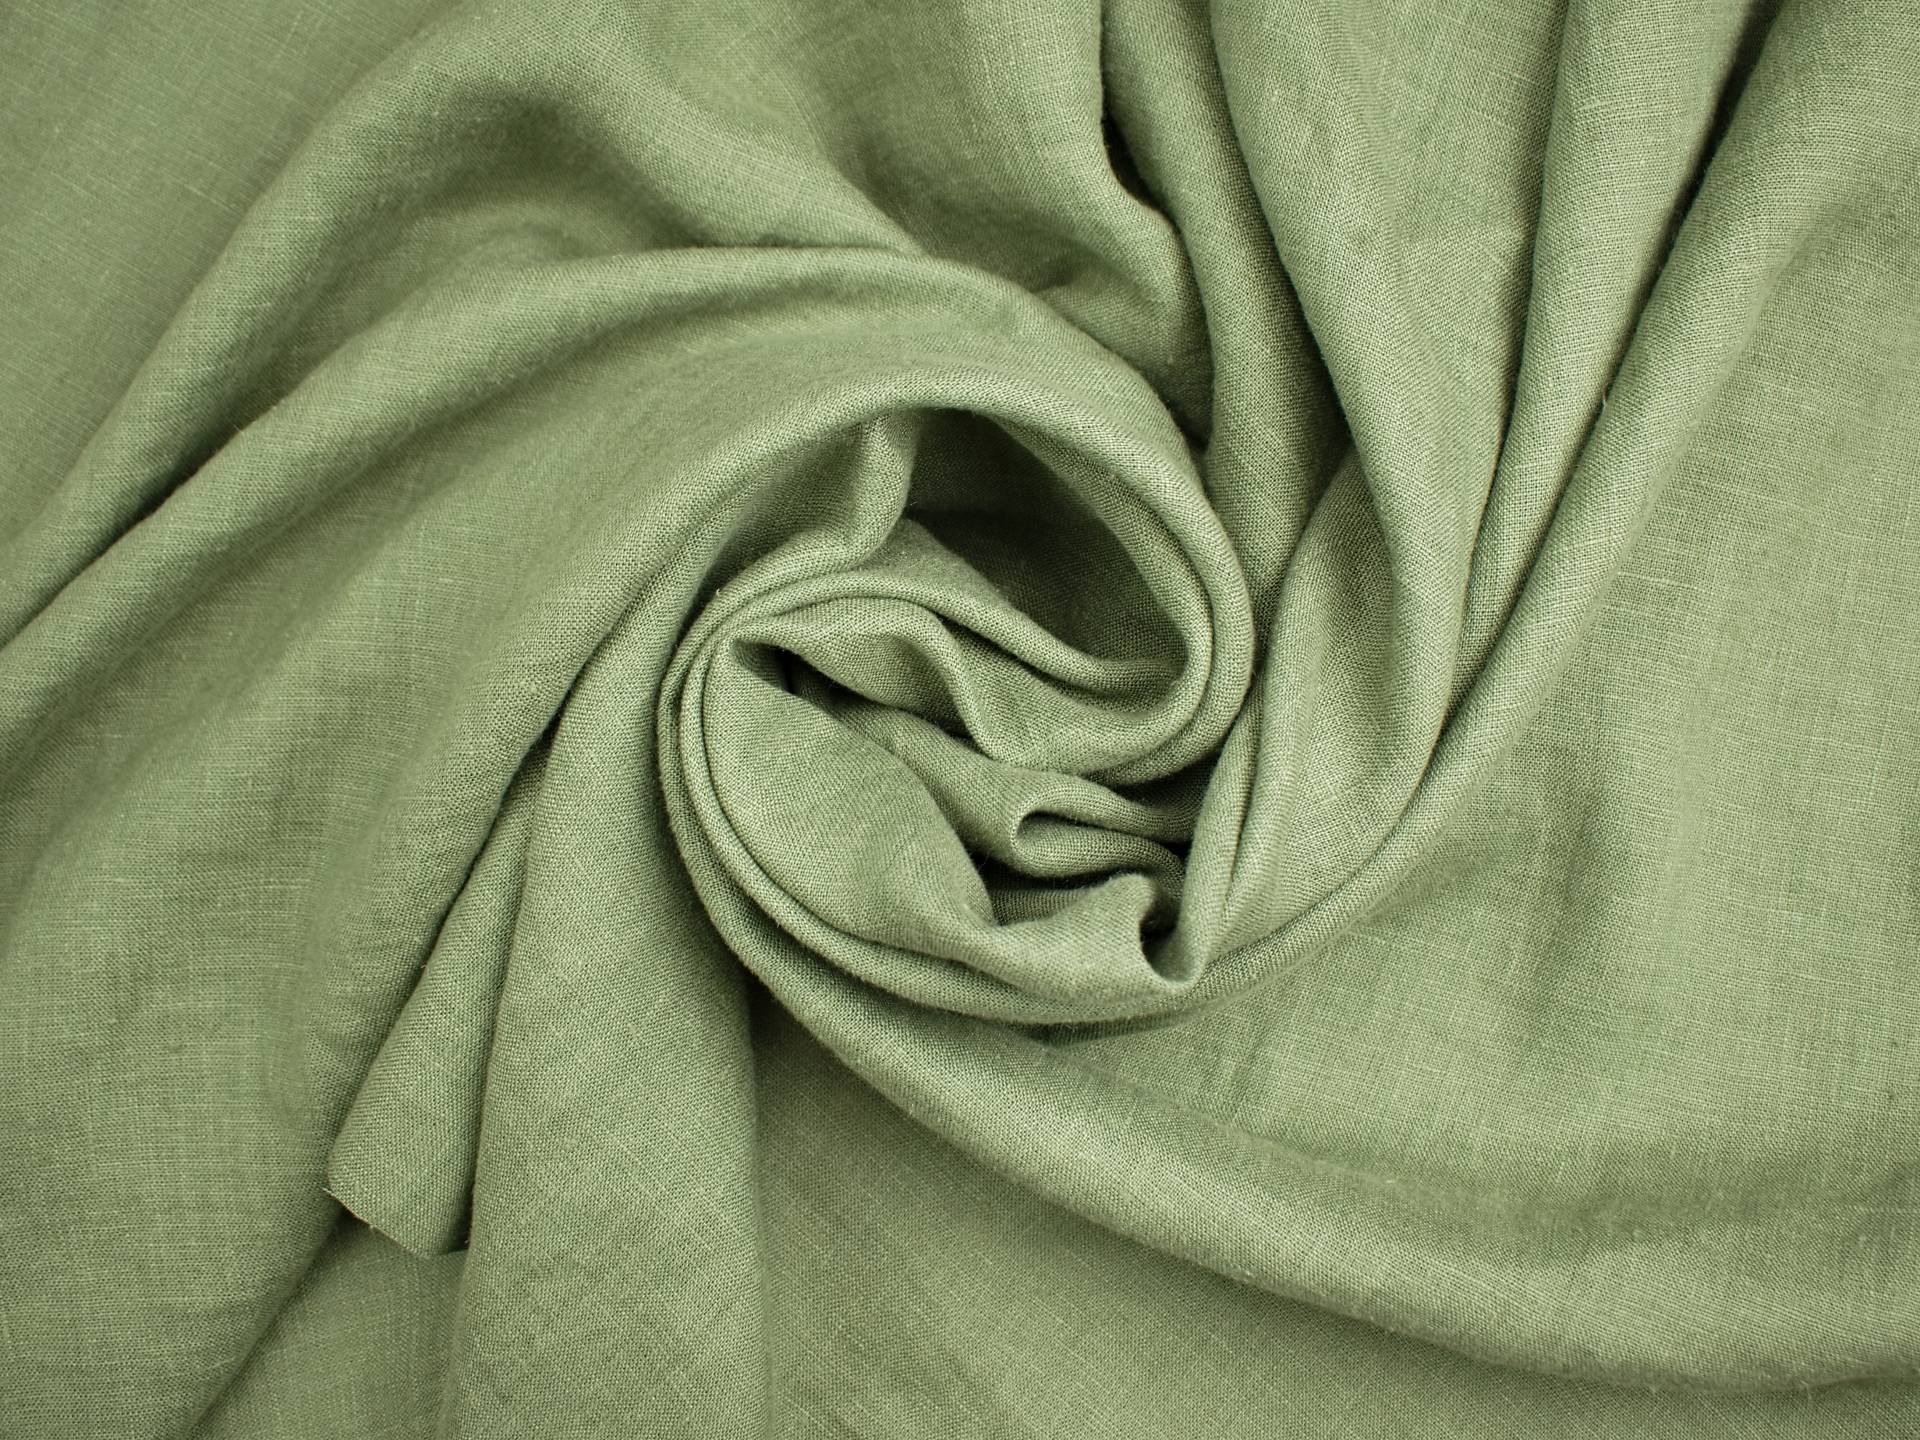 VZOREK - Lněná látka zelená khaki